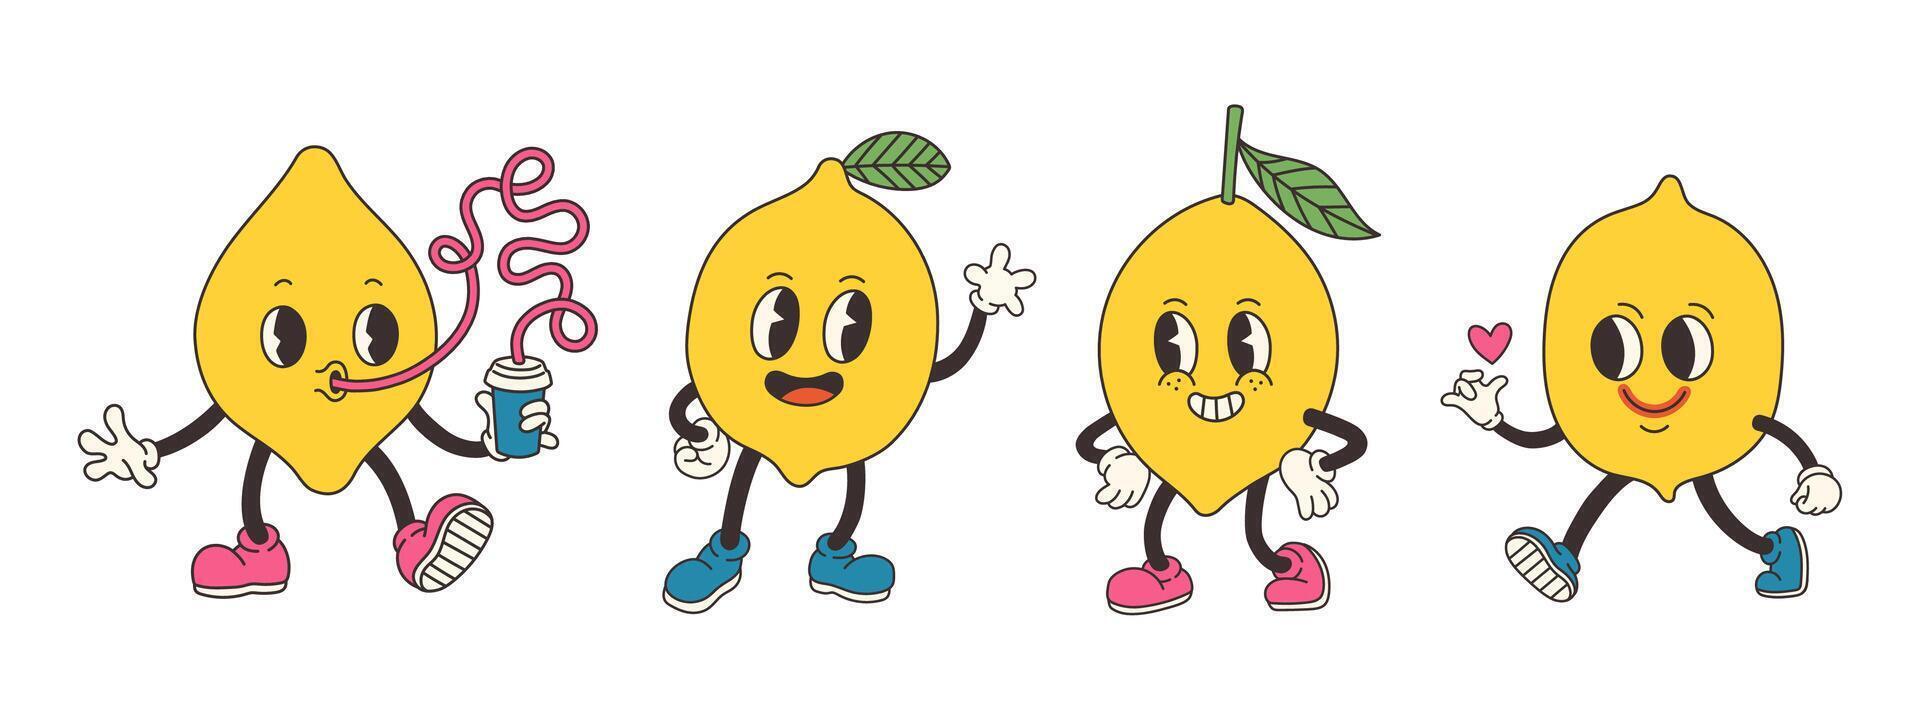 Groovy lemon set. Hand draw Funny Retro vintage trendy style apple cartoon character illustration. Doodle Comic collection. Vector illustration